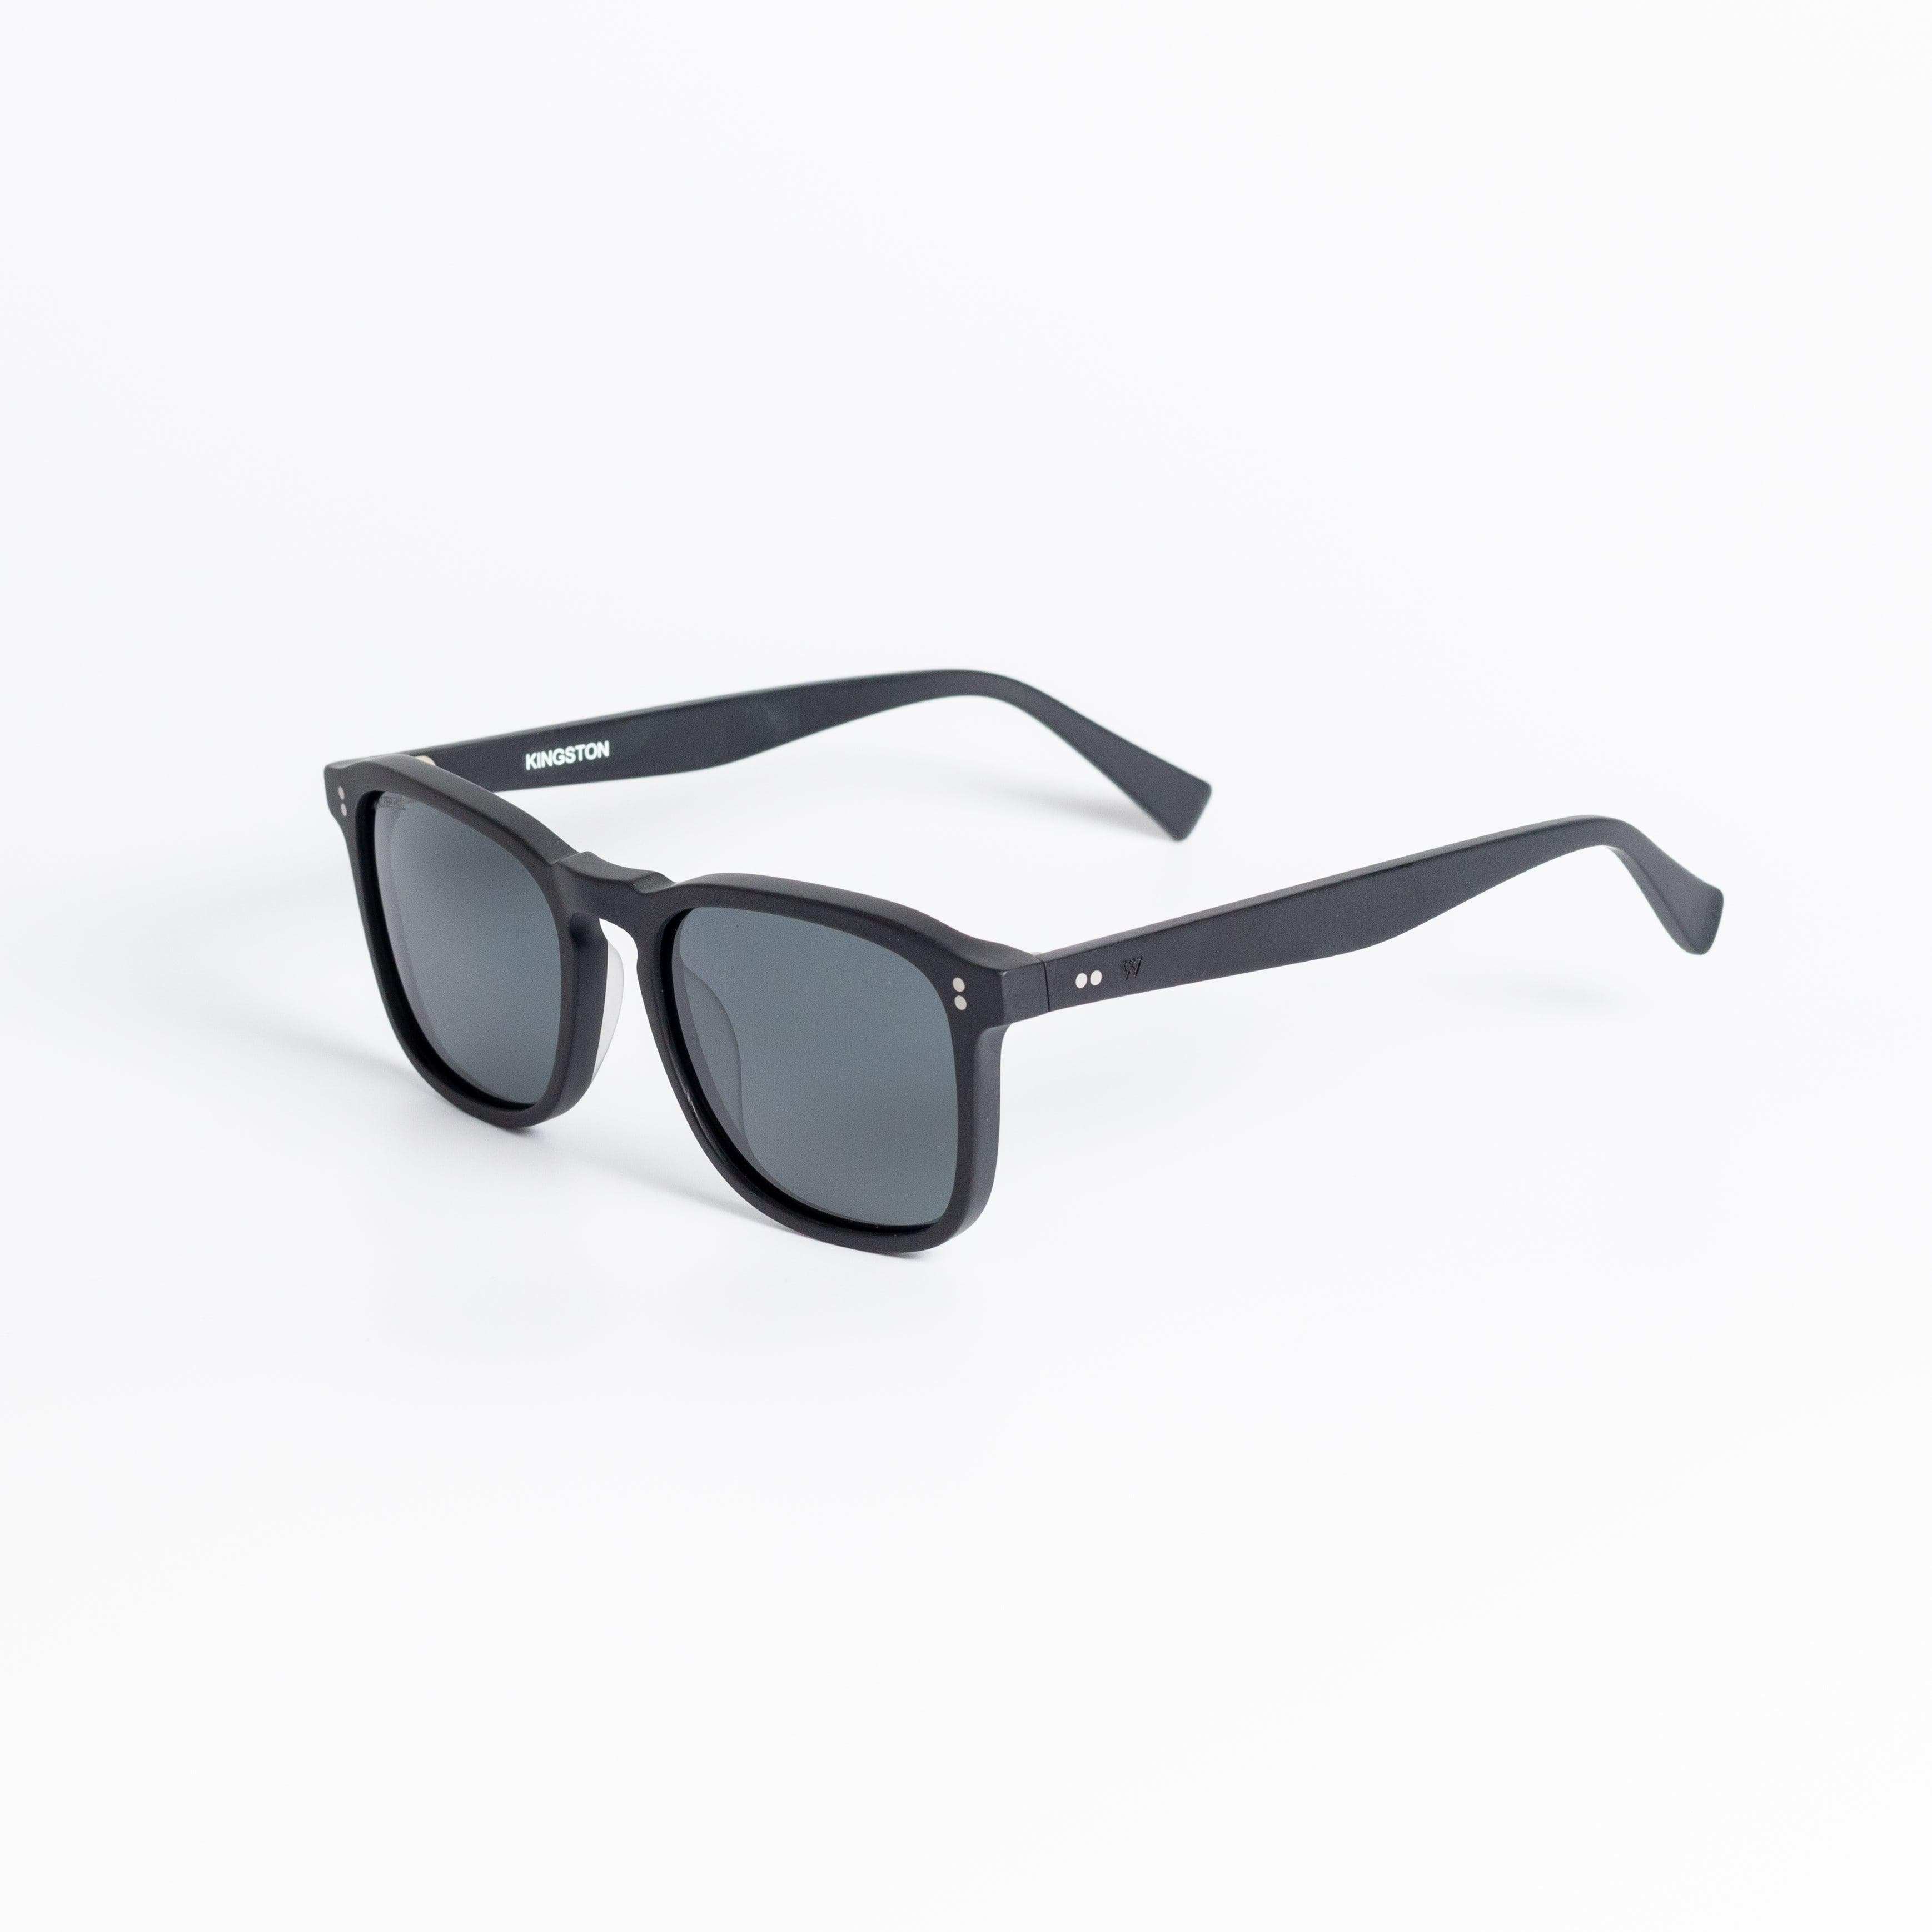 Walter Hill Sunglasses Matte Black / Standard / Polarized Cat.3 KINGSTON - Matte Black